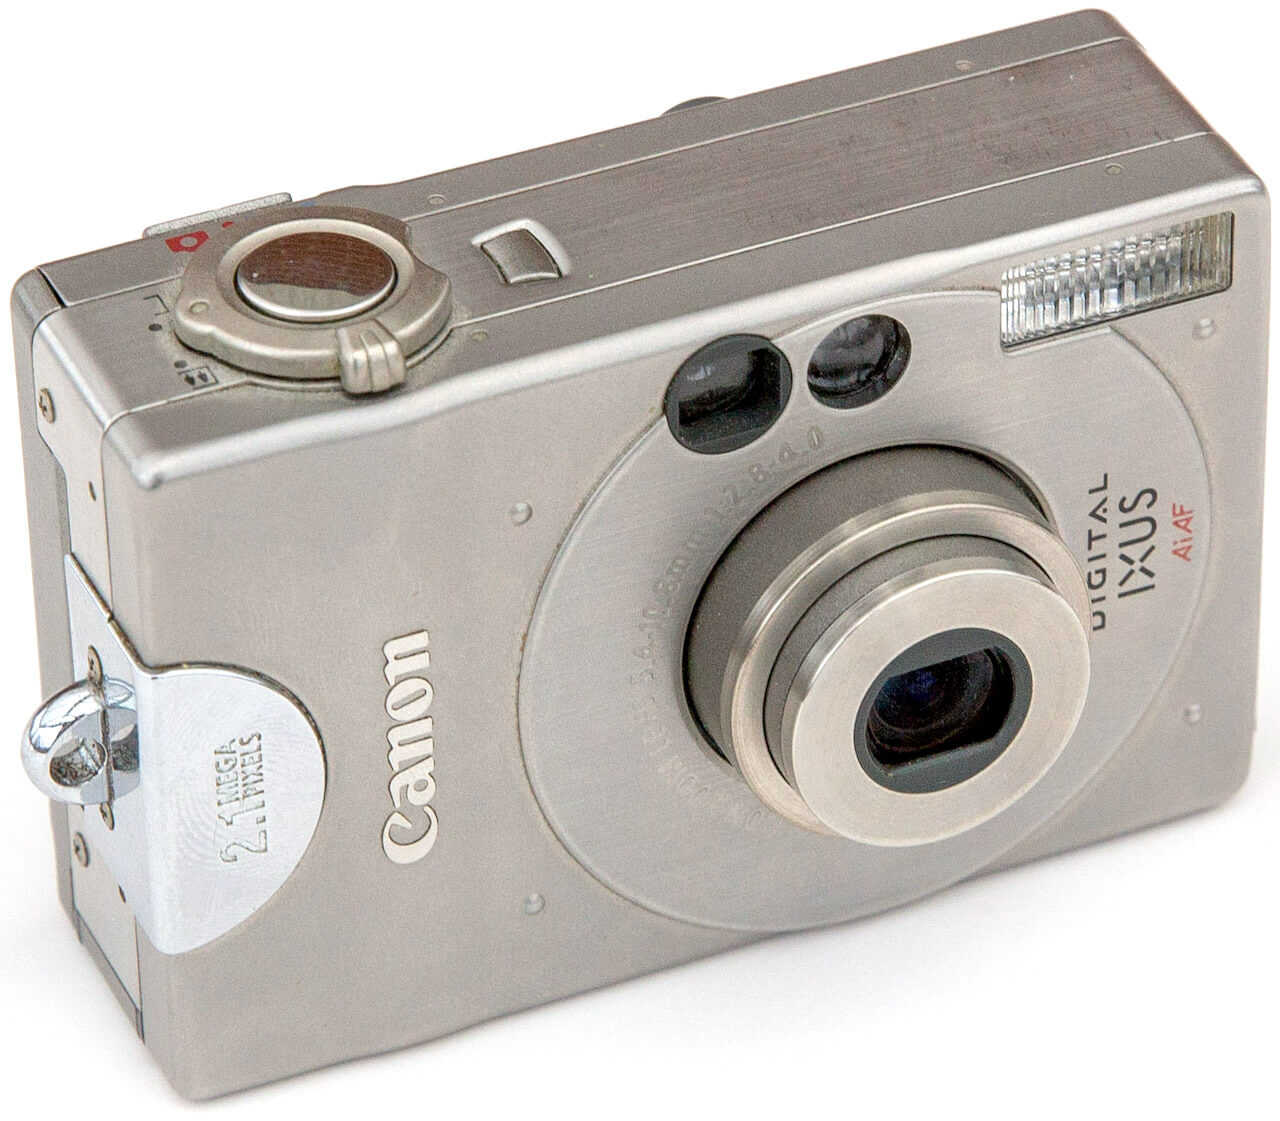 My first digital camera, the Canon Digital Ixus. (113-90)